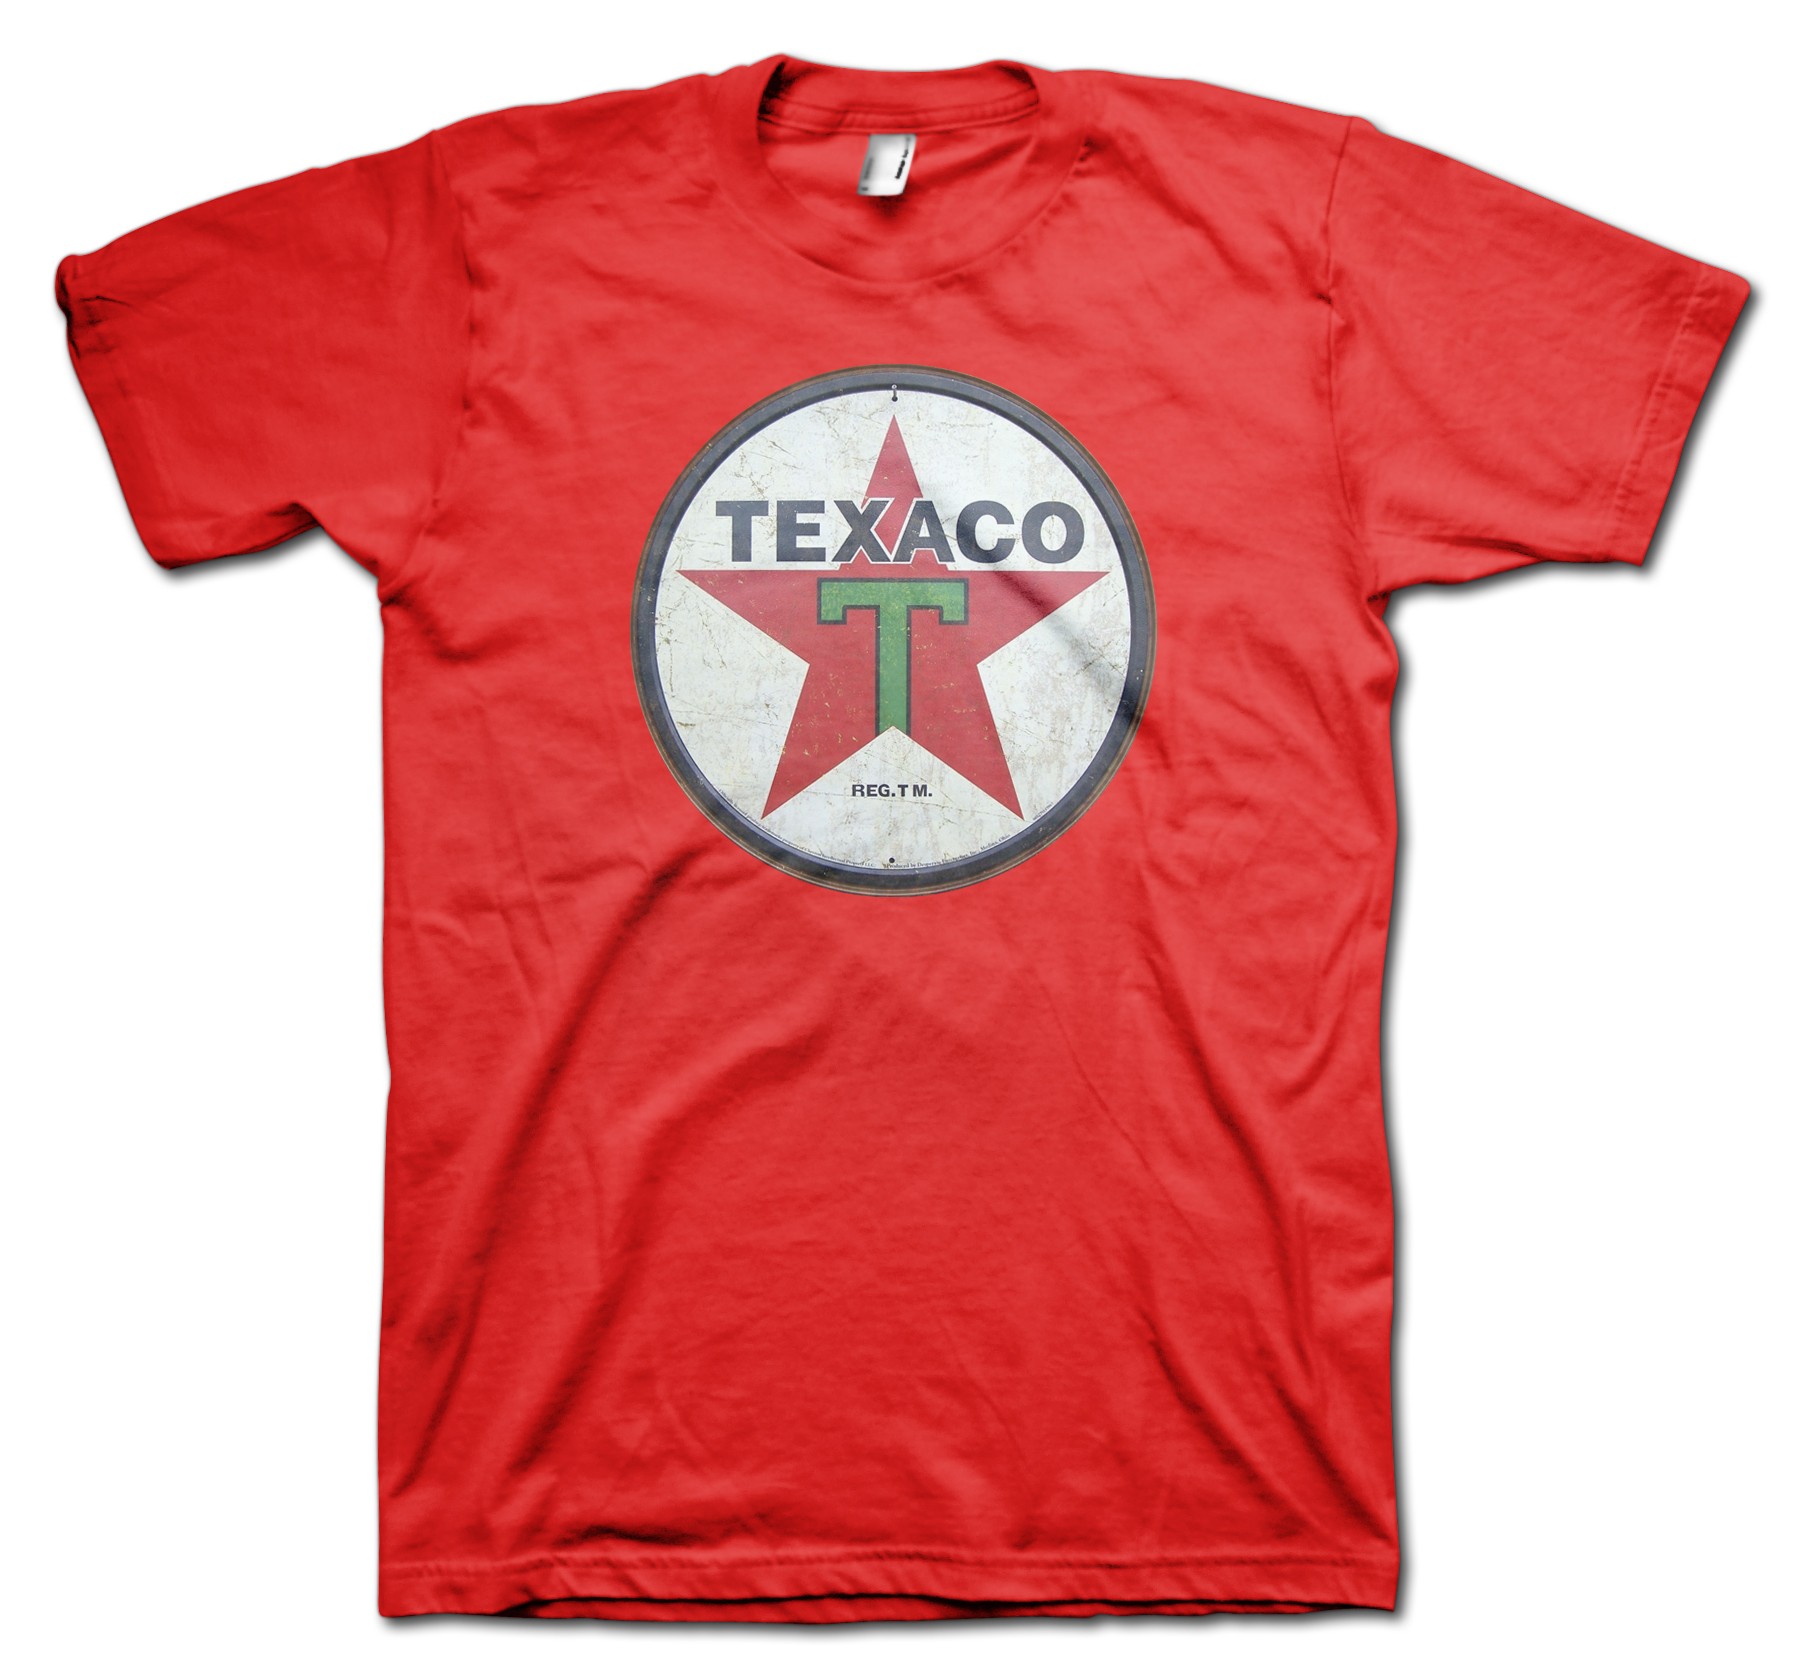 Texaco Retro T-Shirt